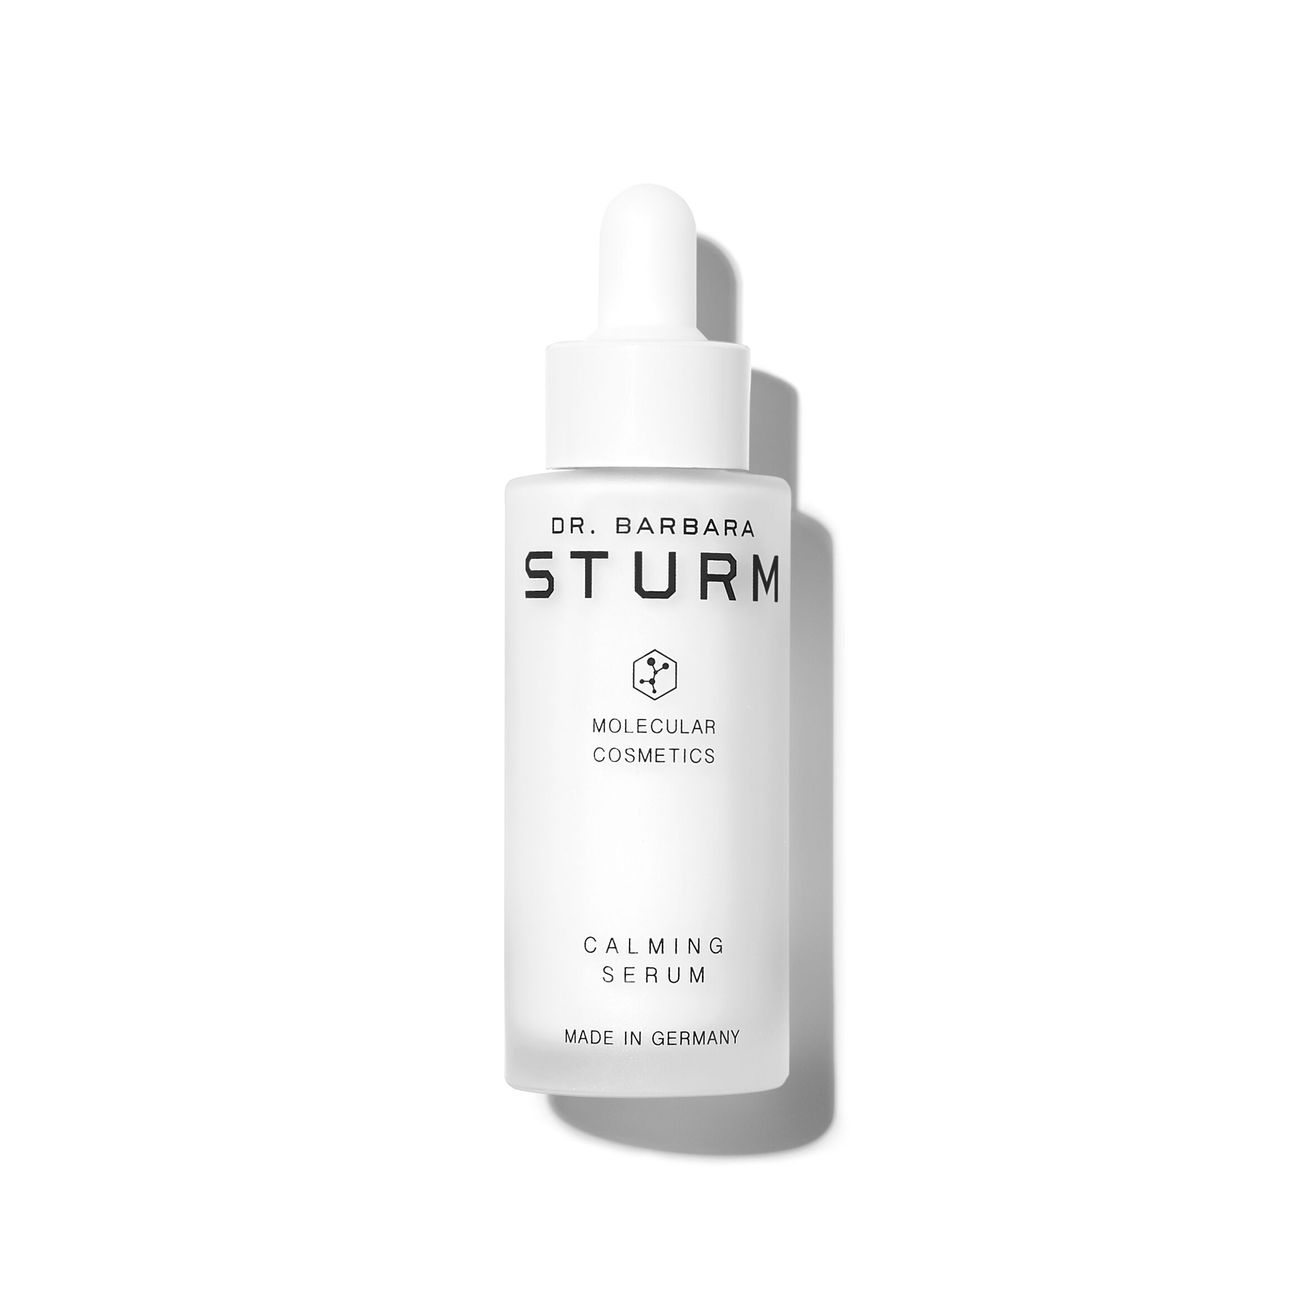 A bottle of Dr Barbara Sturm calming serum